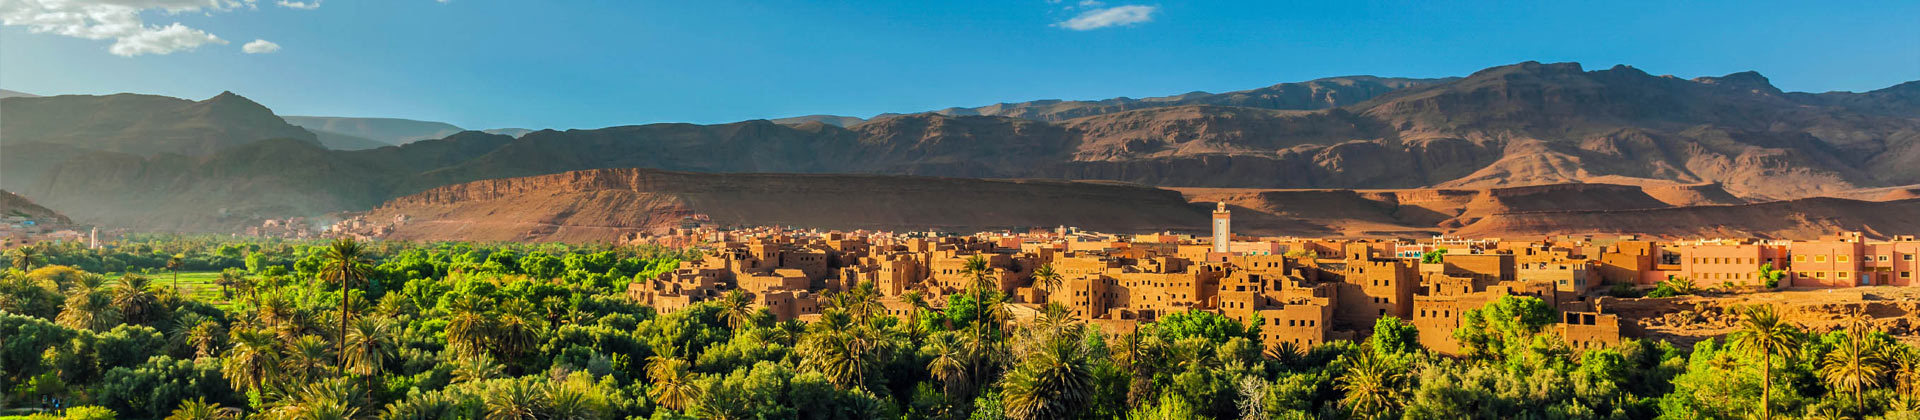 Mejor época para viajar a Marruecos